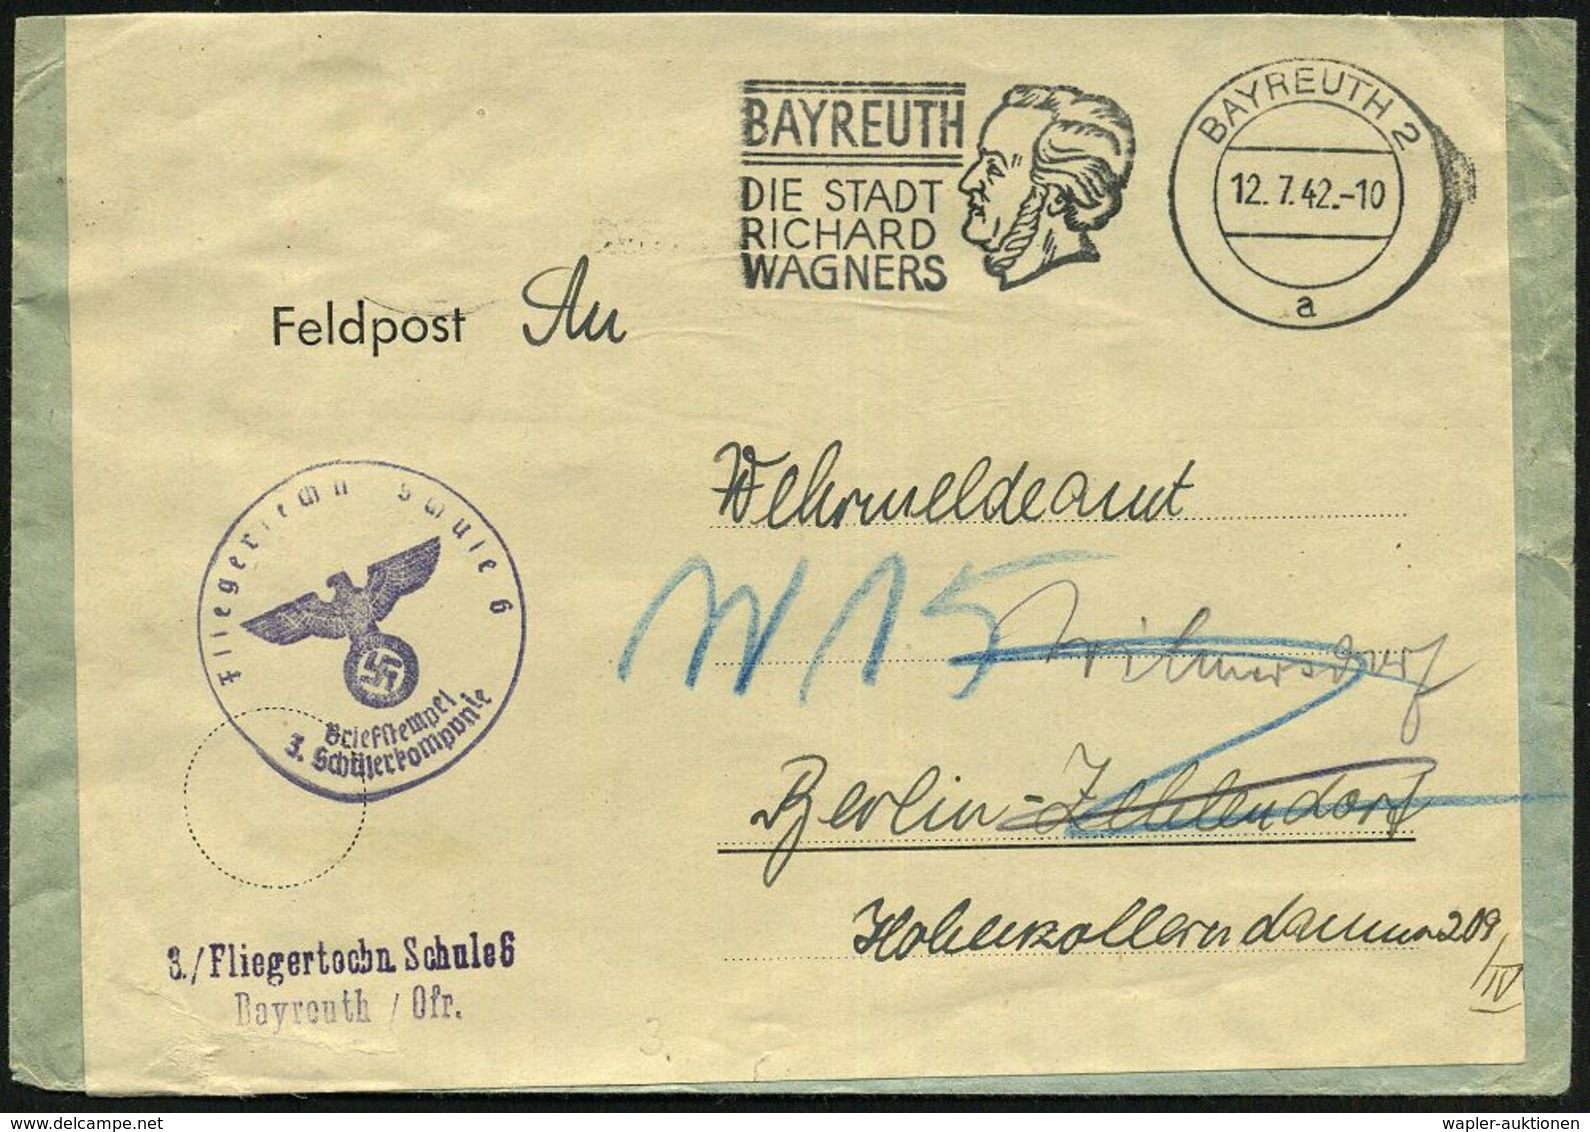 BAYREUTH 2/ A/ DIE STADT/ RICHARD/ WAGNERS 1942 (12.7.) MWSt (Kopfbild R. Wagner) + Viol. 1K-HdN: Fliegertechn. Schule/3 - Aerei